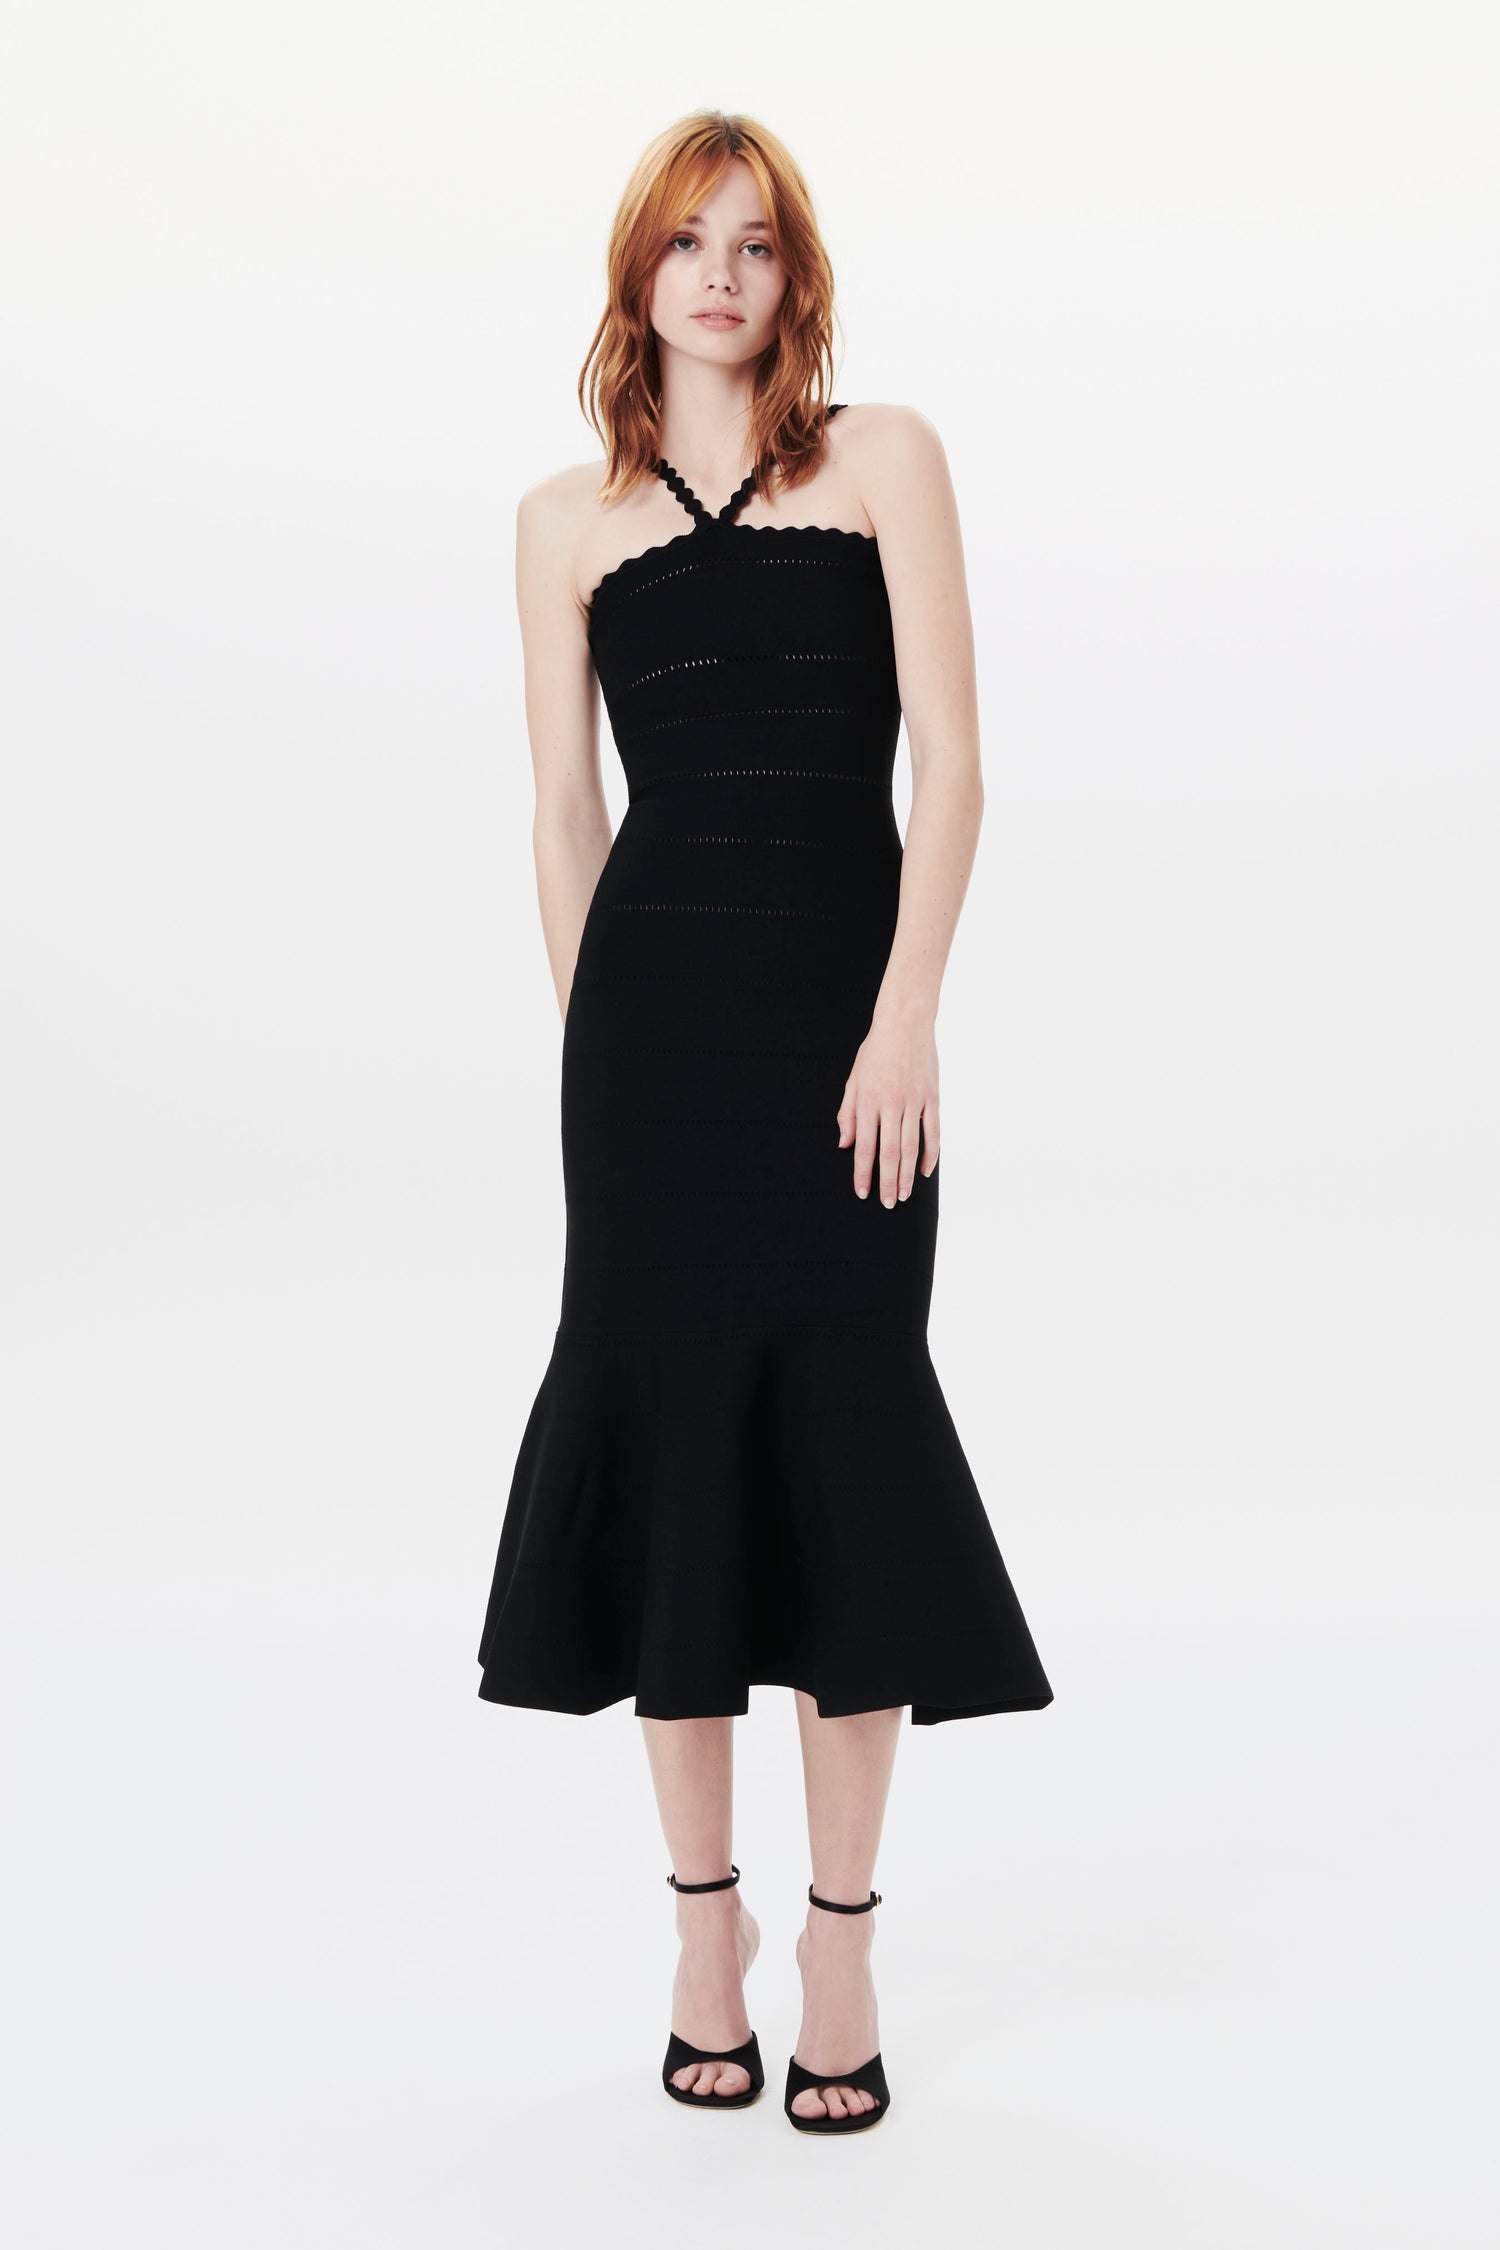 Catchall Victoria Black Feather Tassel Midi Dress, Black / S